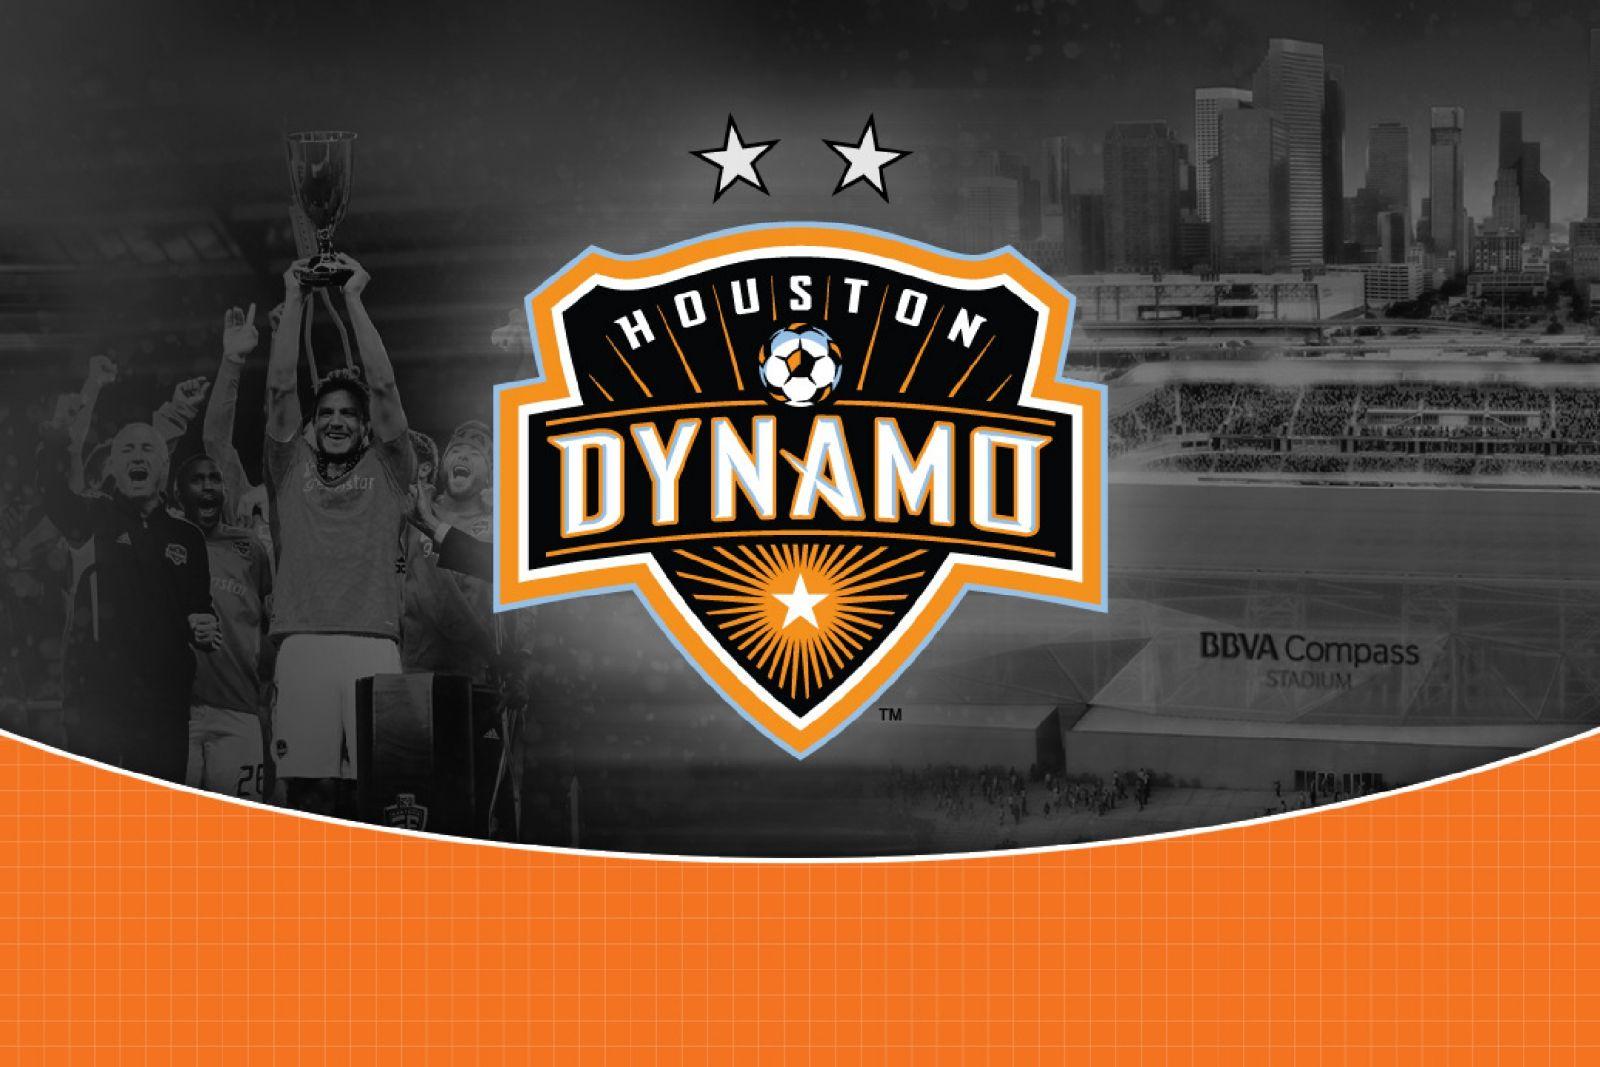 MLS Houston Dynamo Logo Team wallpaper 2018 in Soccer